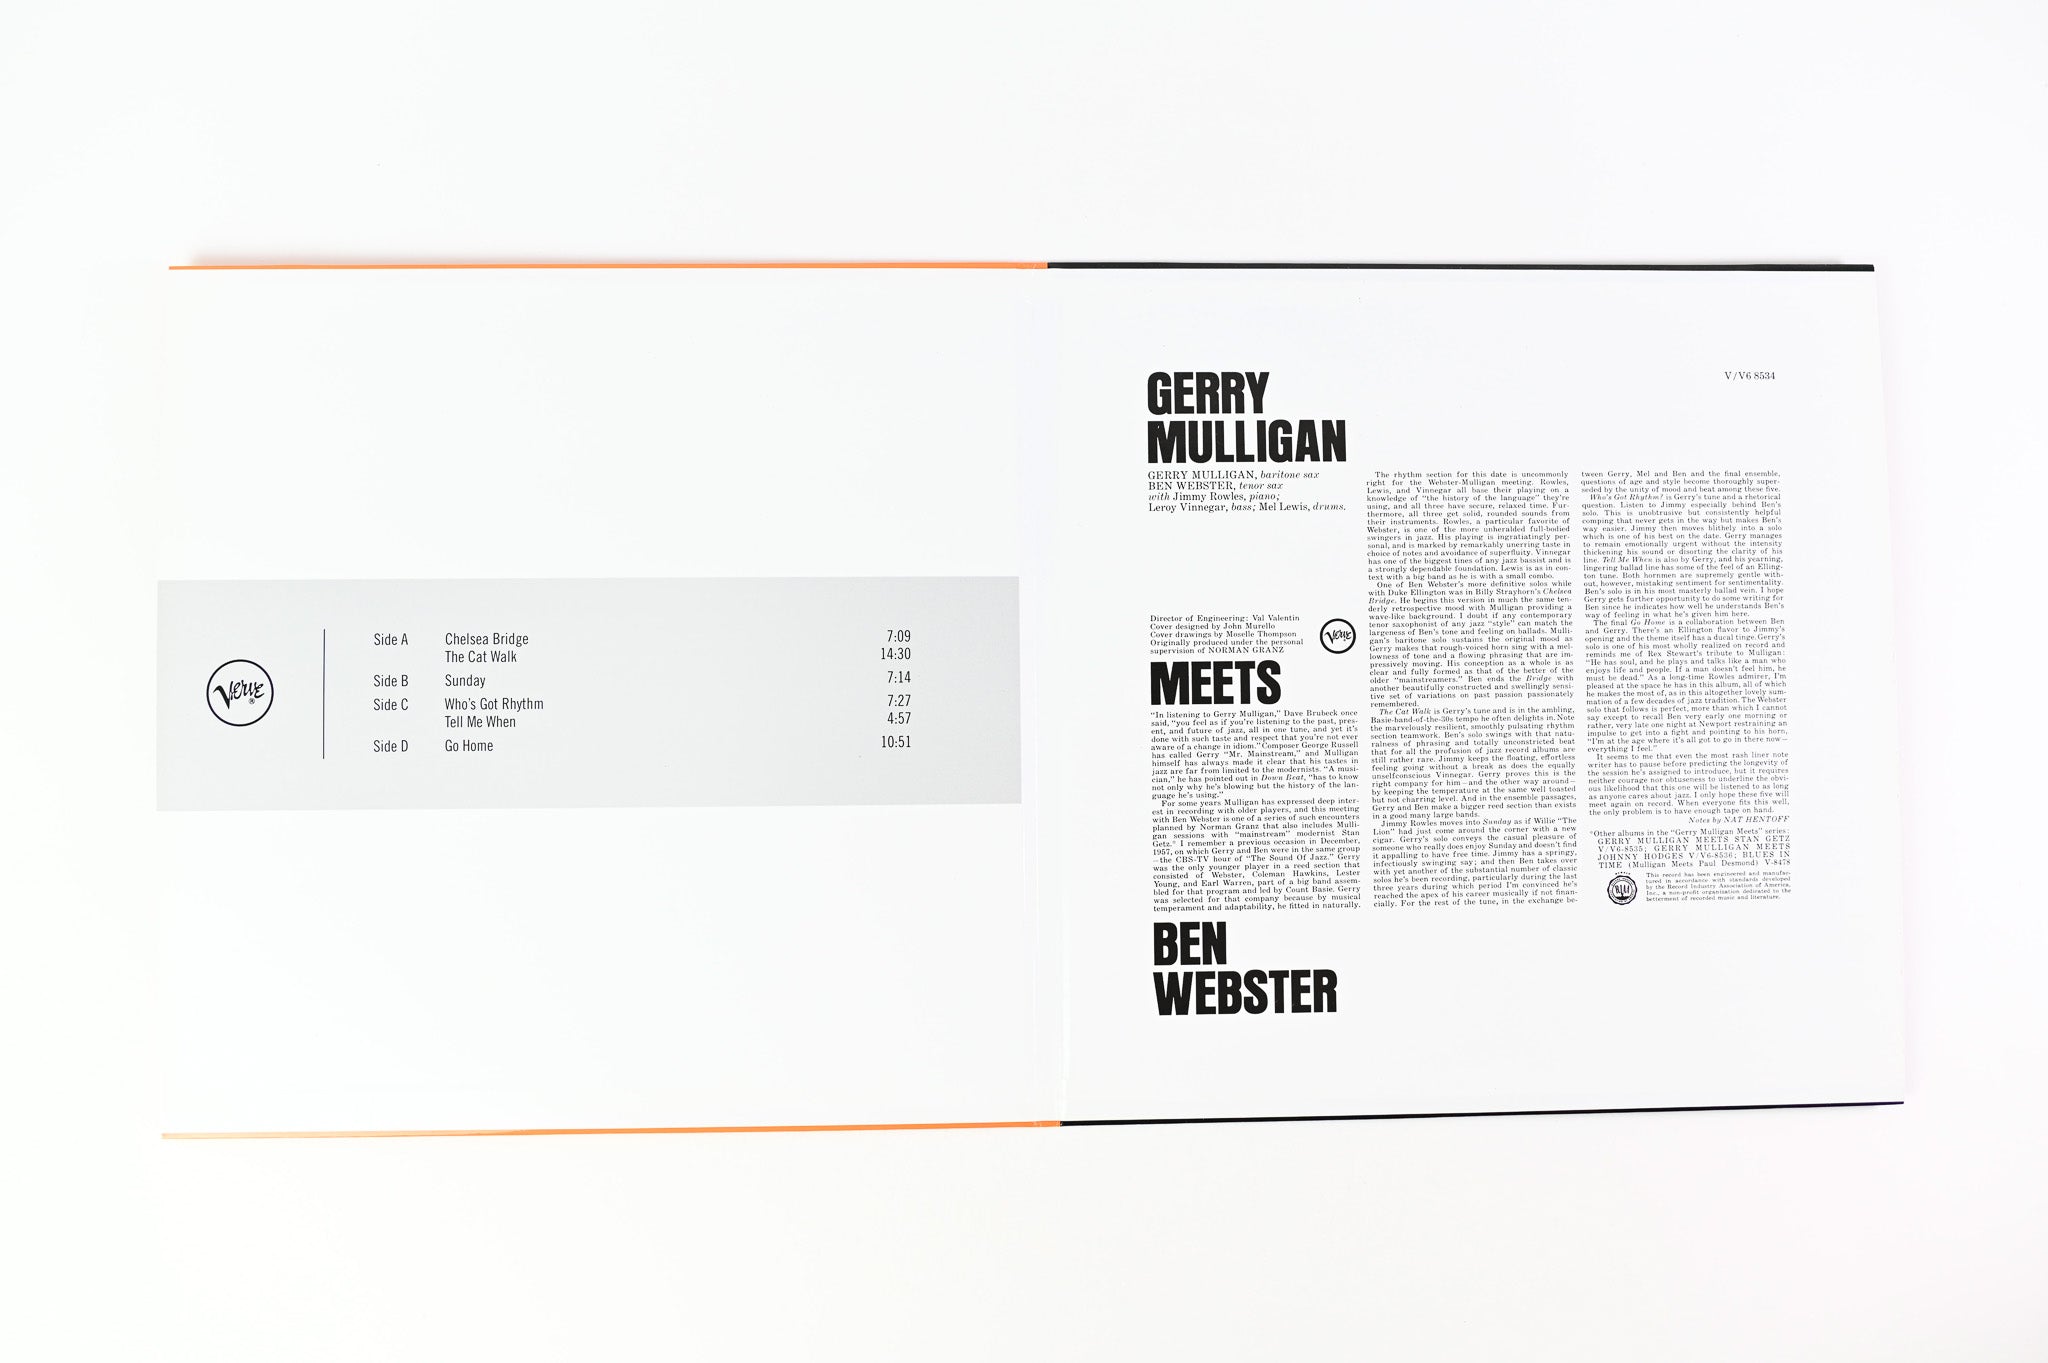 Gerry Mulligan - Gerry Mulligan Meets Ben Webster on Verve ORG Ltd Numbered 45 RPM Reissue